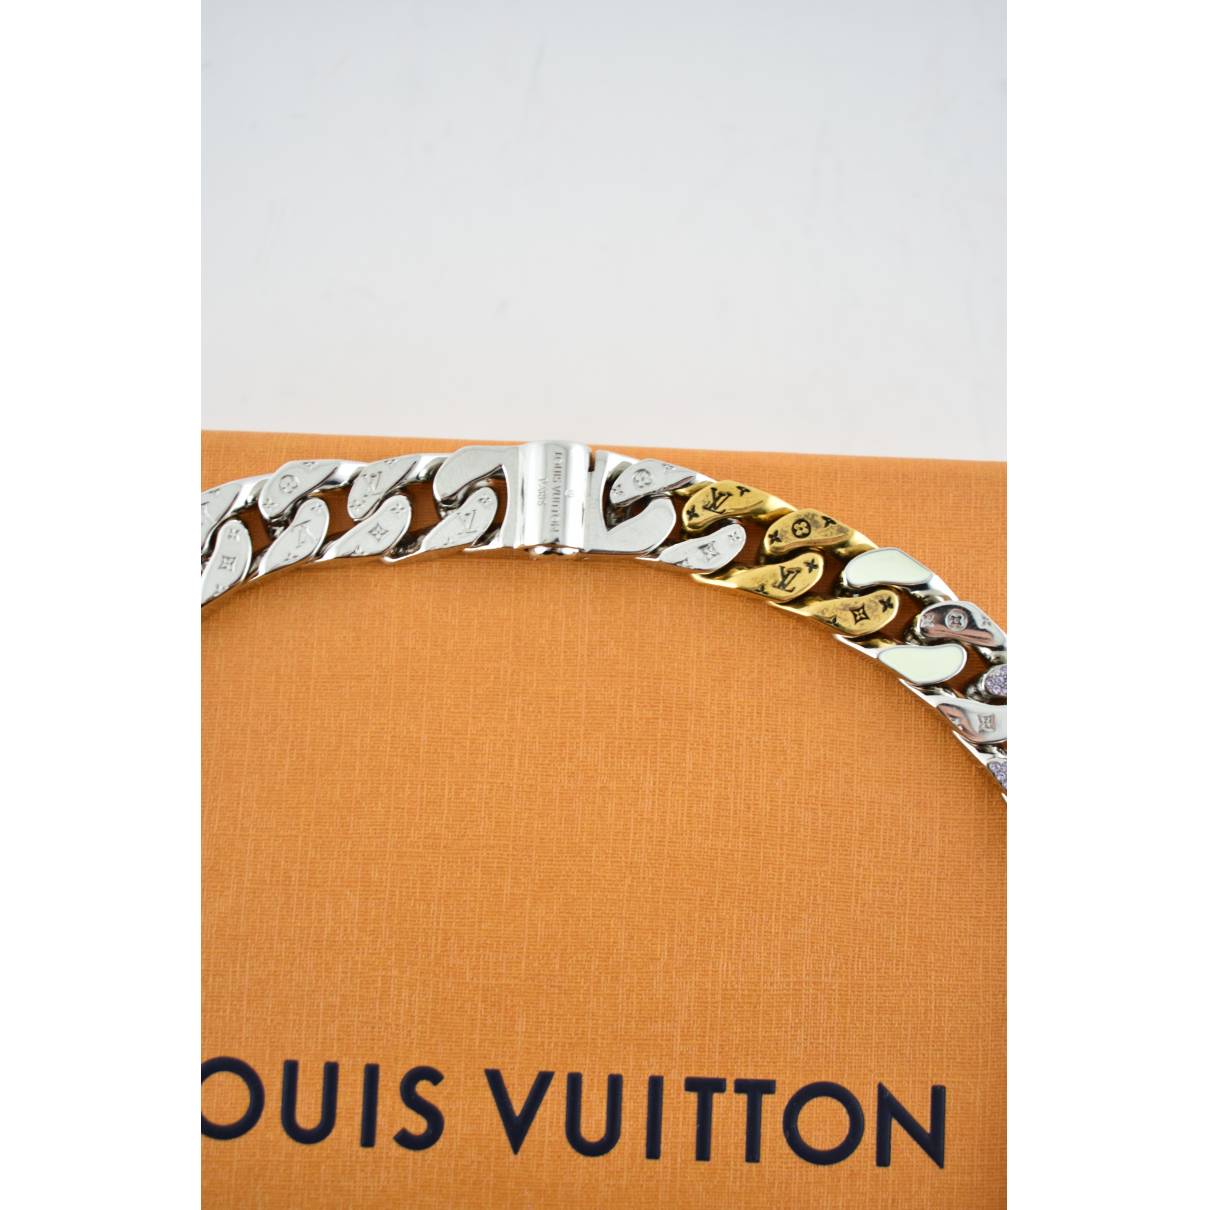 Louis Vuitton LV Chain Links Necklace - Brass Chain, Necklaces - LOU721584